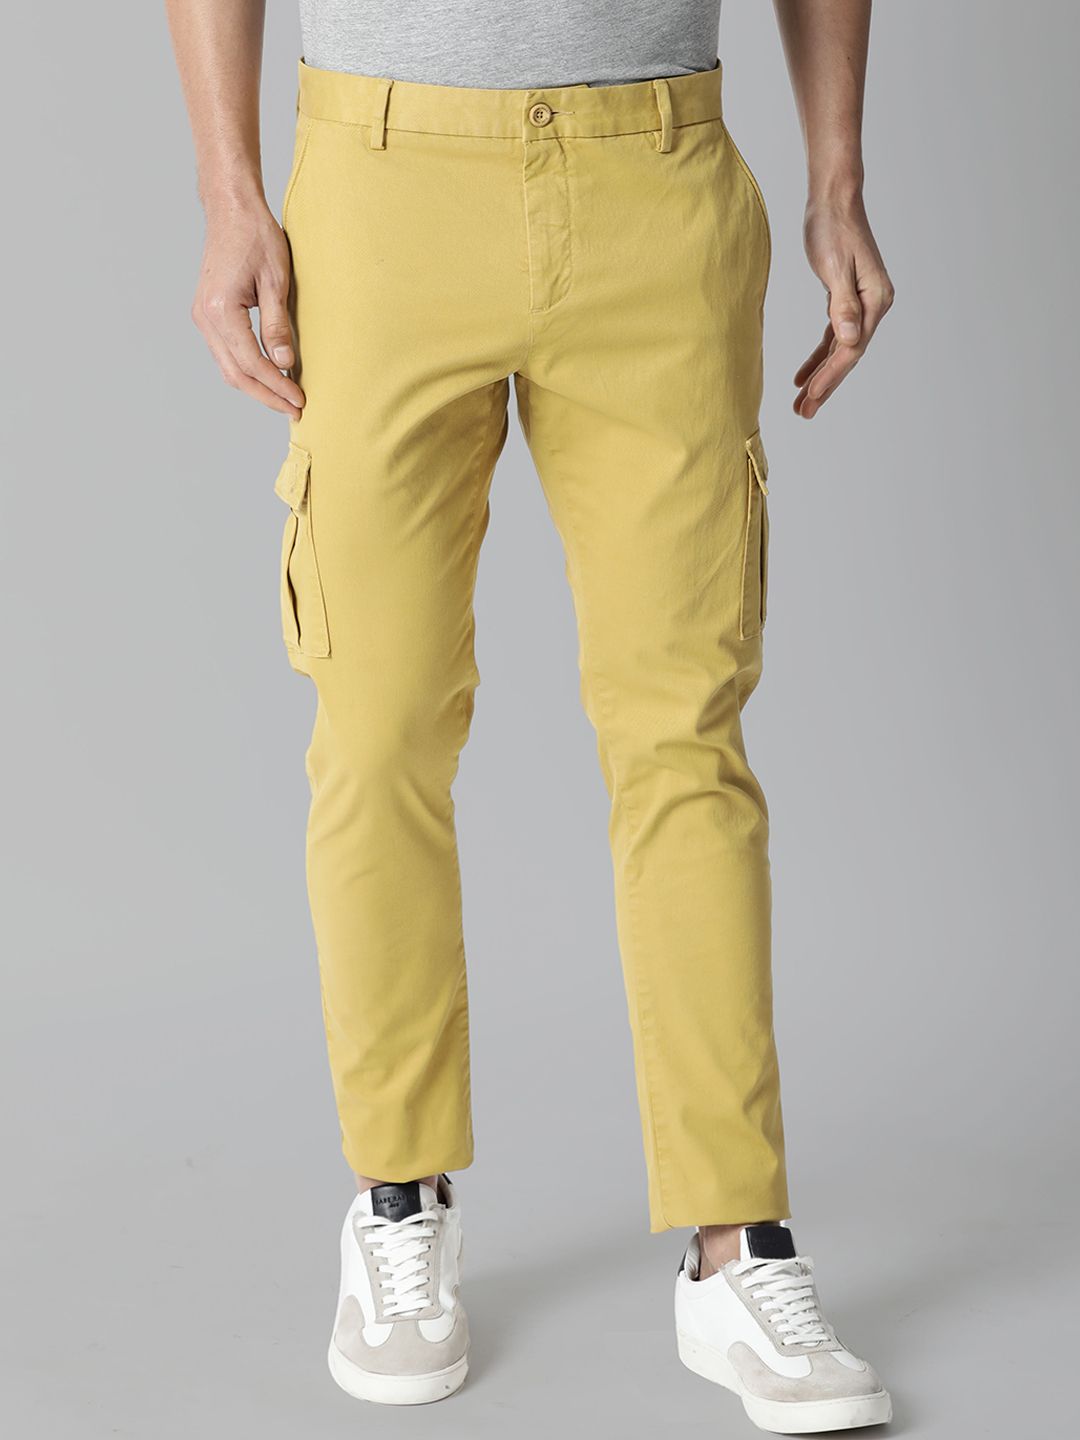 ASOS DESIGN cargo trousers in yellow | ASOS